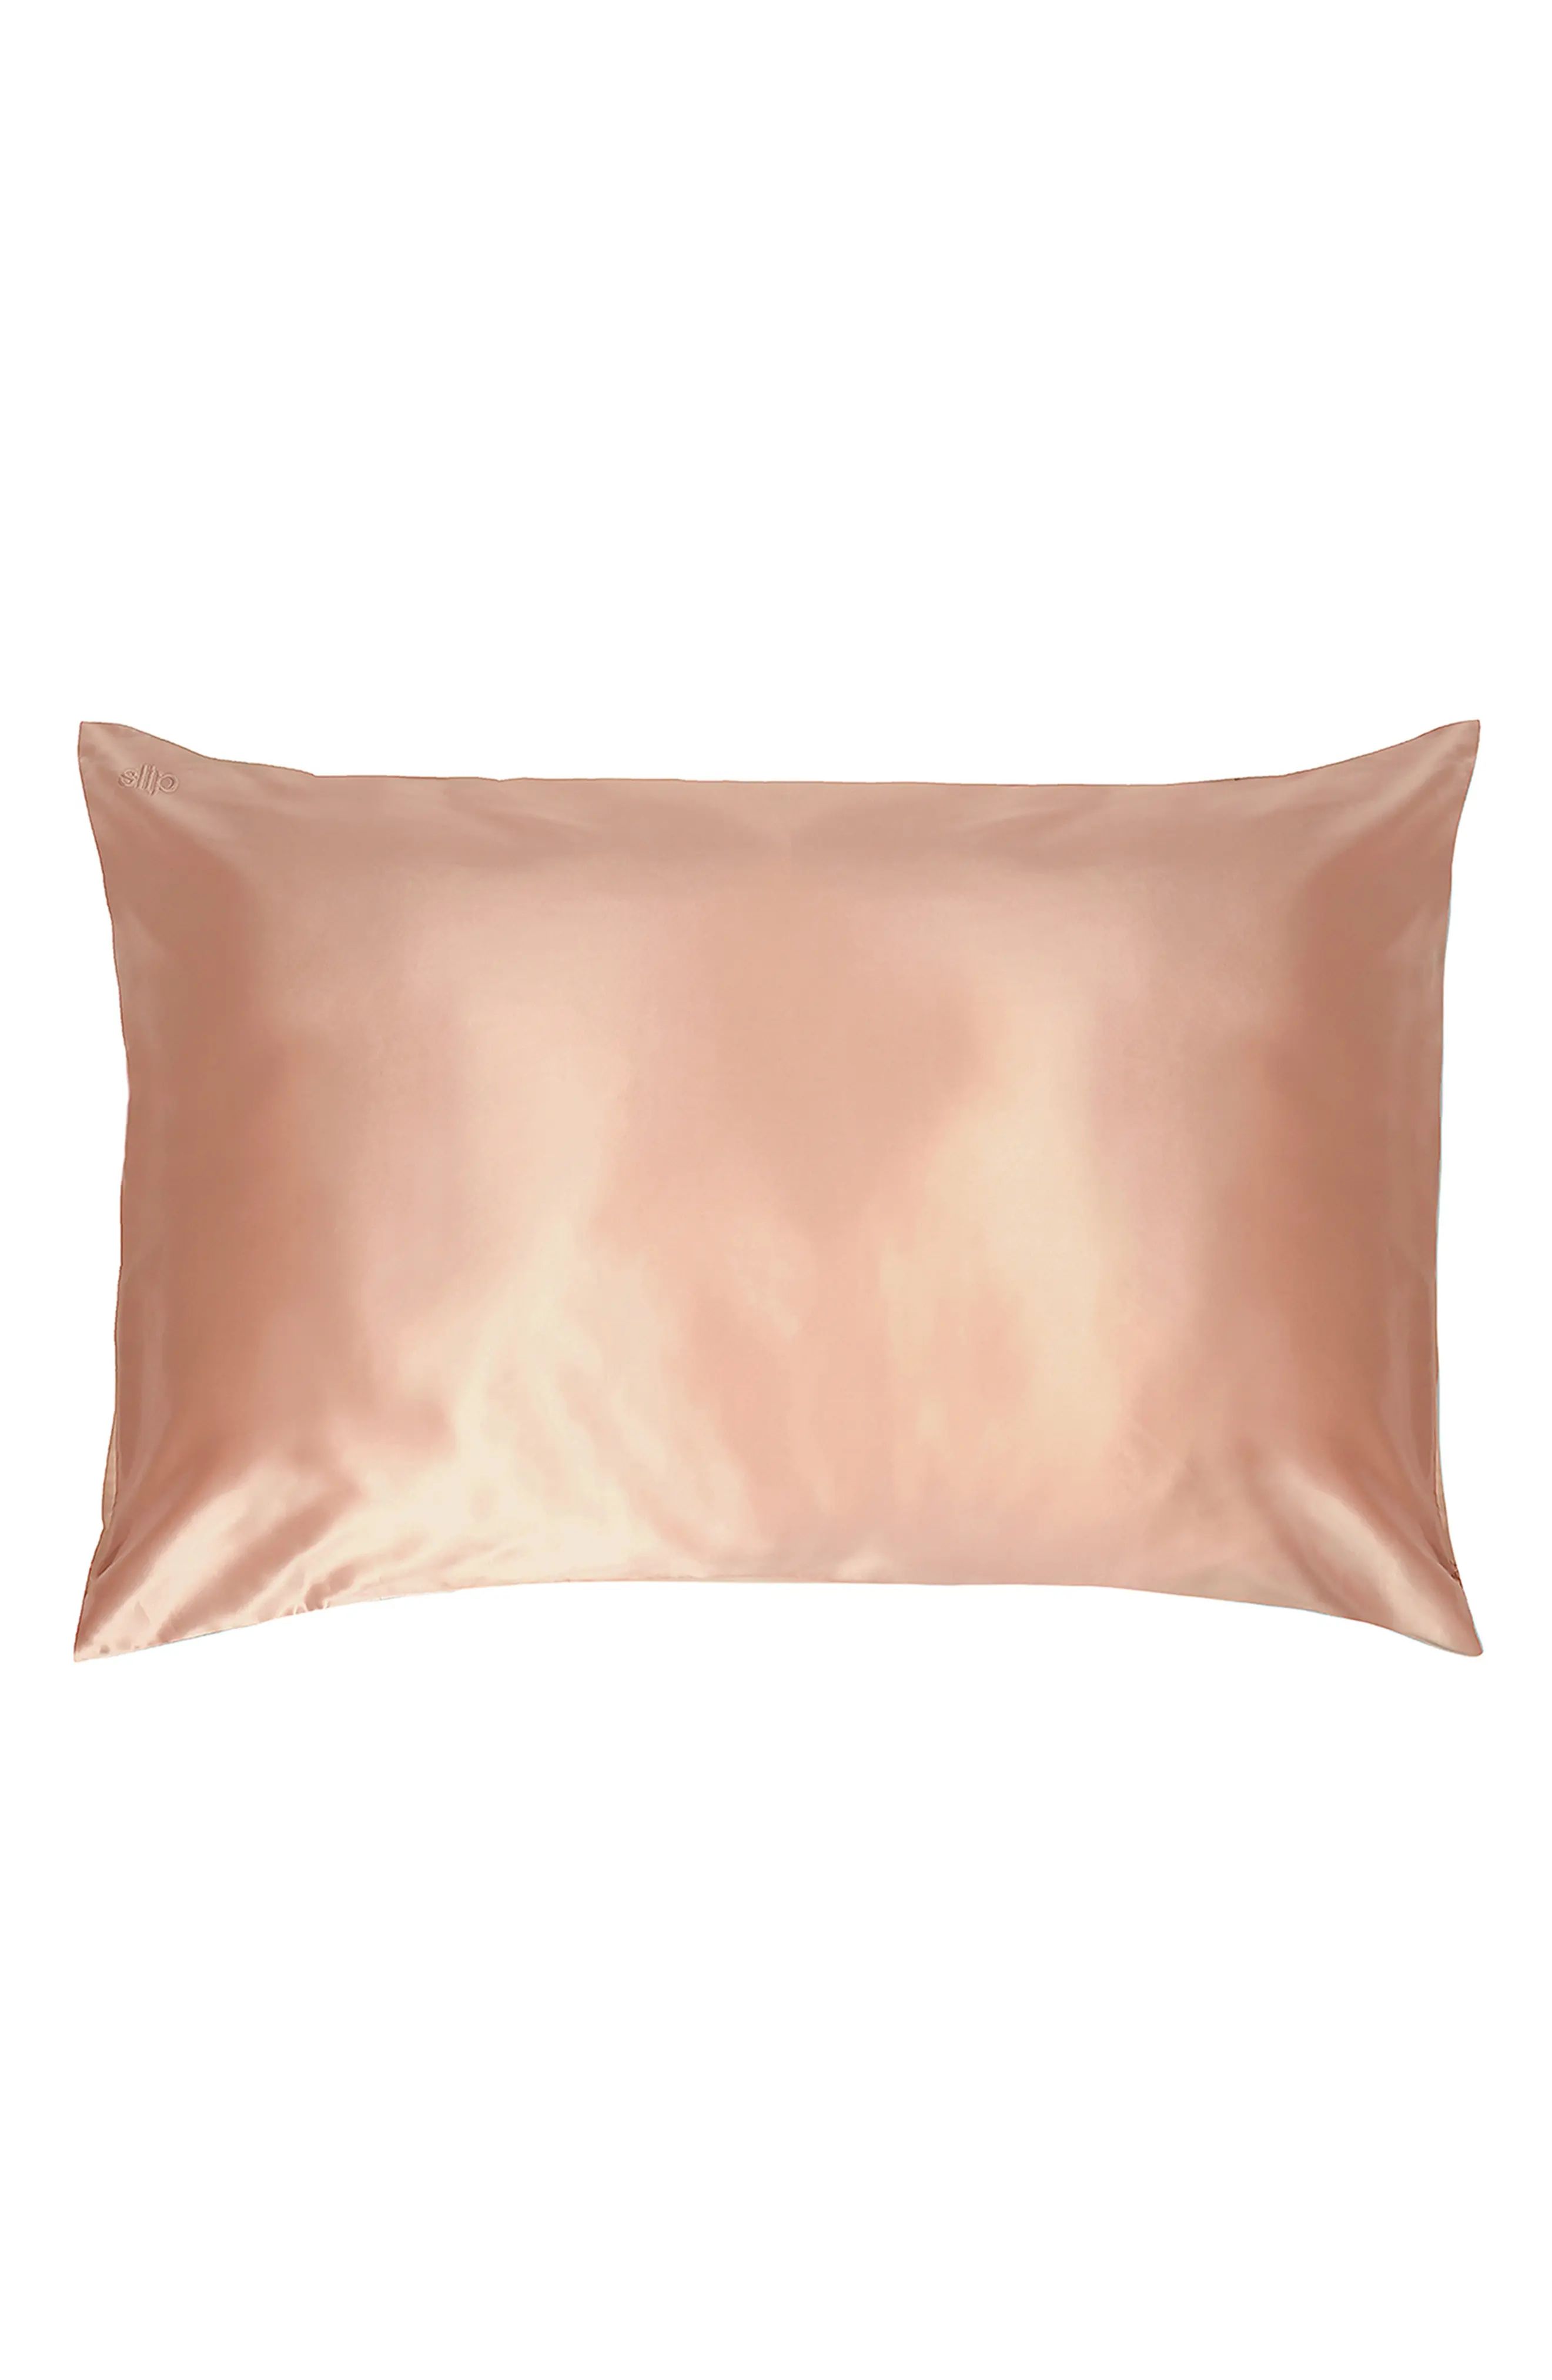 Slip Pure Silk Pillowcase, Size Queen - Rose Gold | Nordstrom